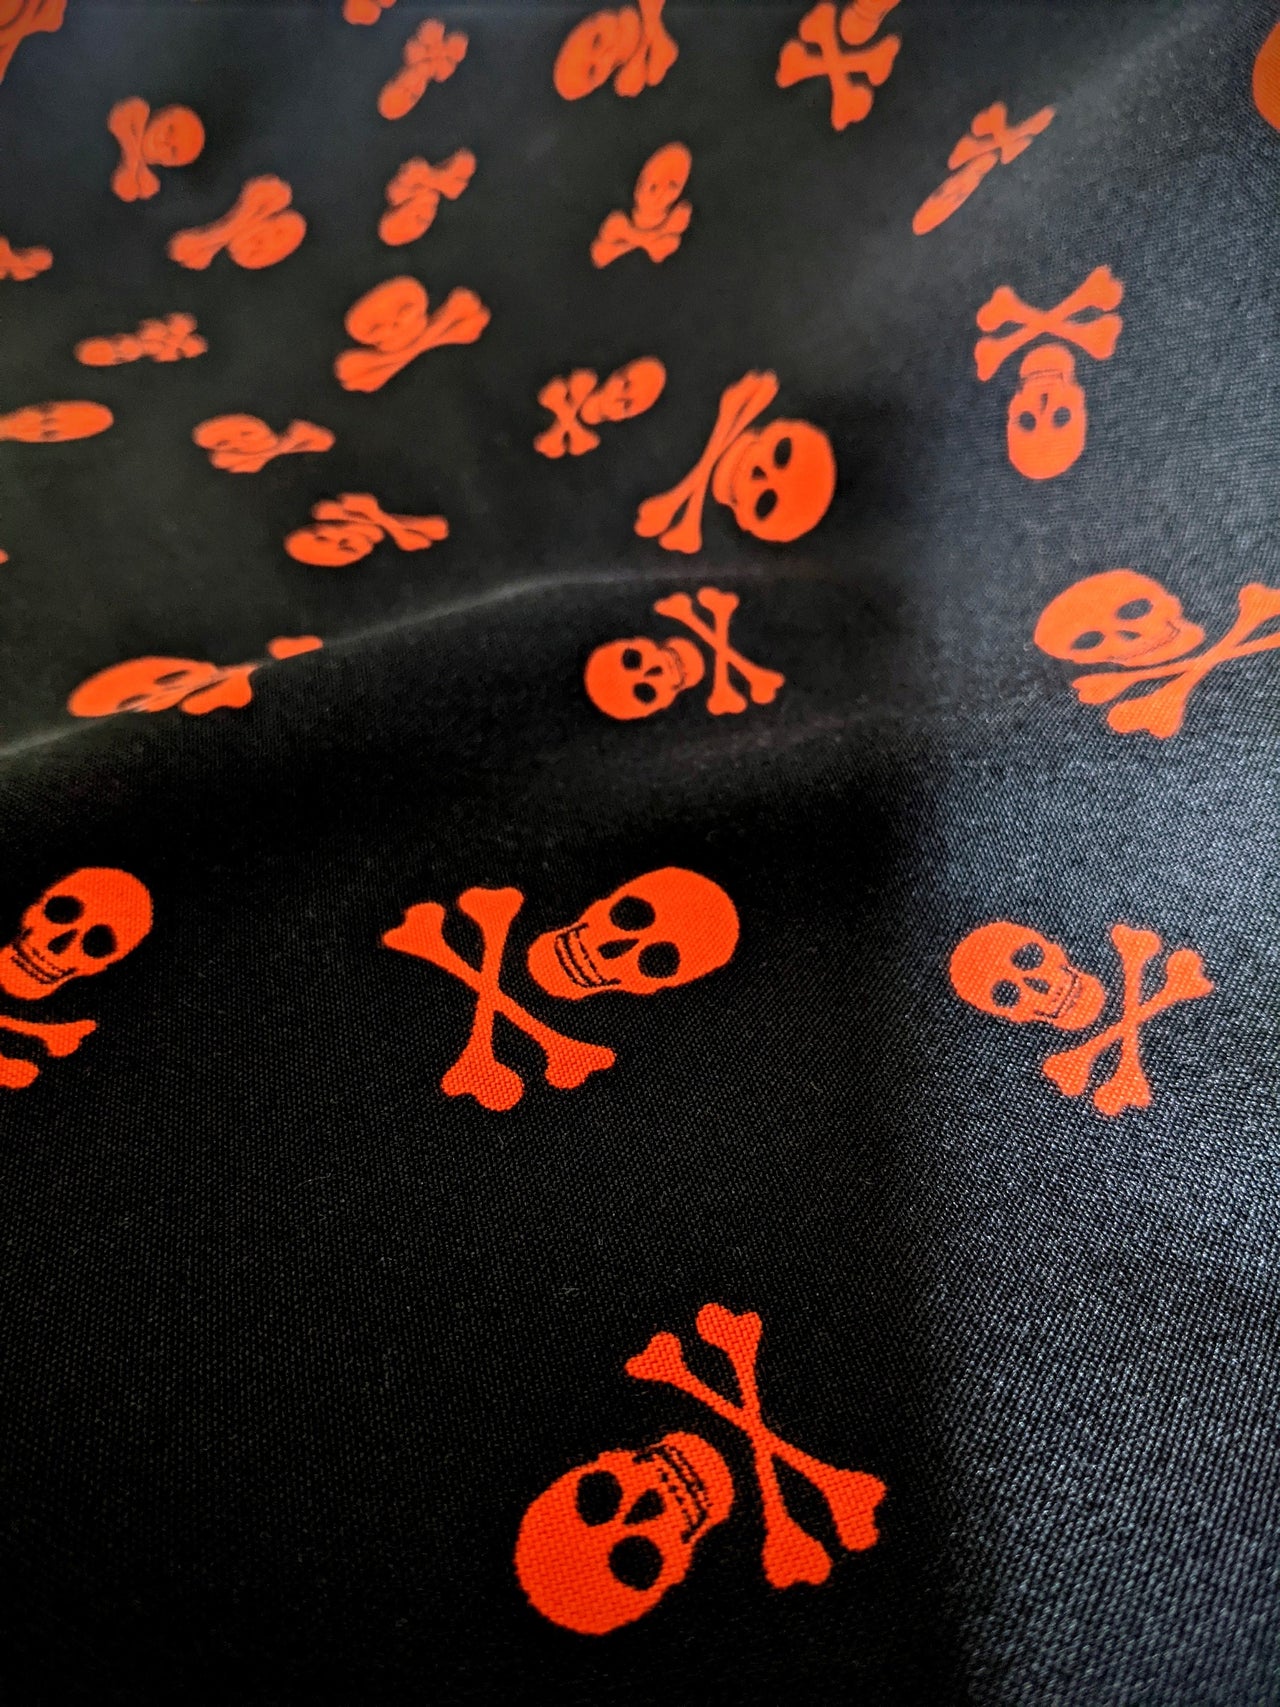 Black And Red Skull Crossbone Bi-Stretch Fabric, Halloween Fabric, Sewing Fabric